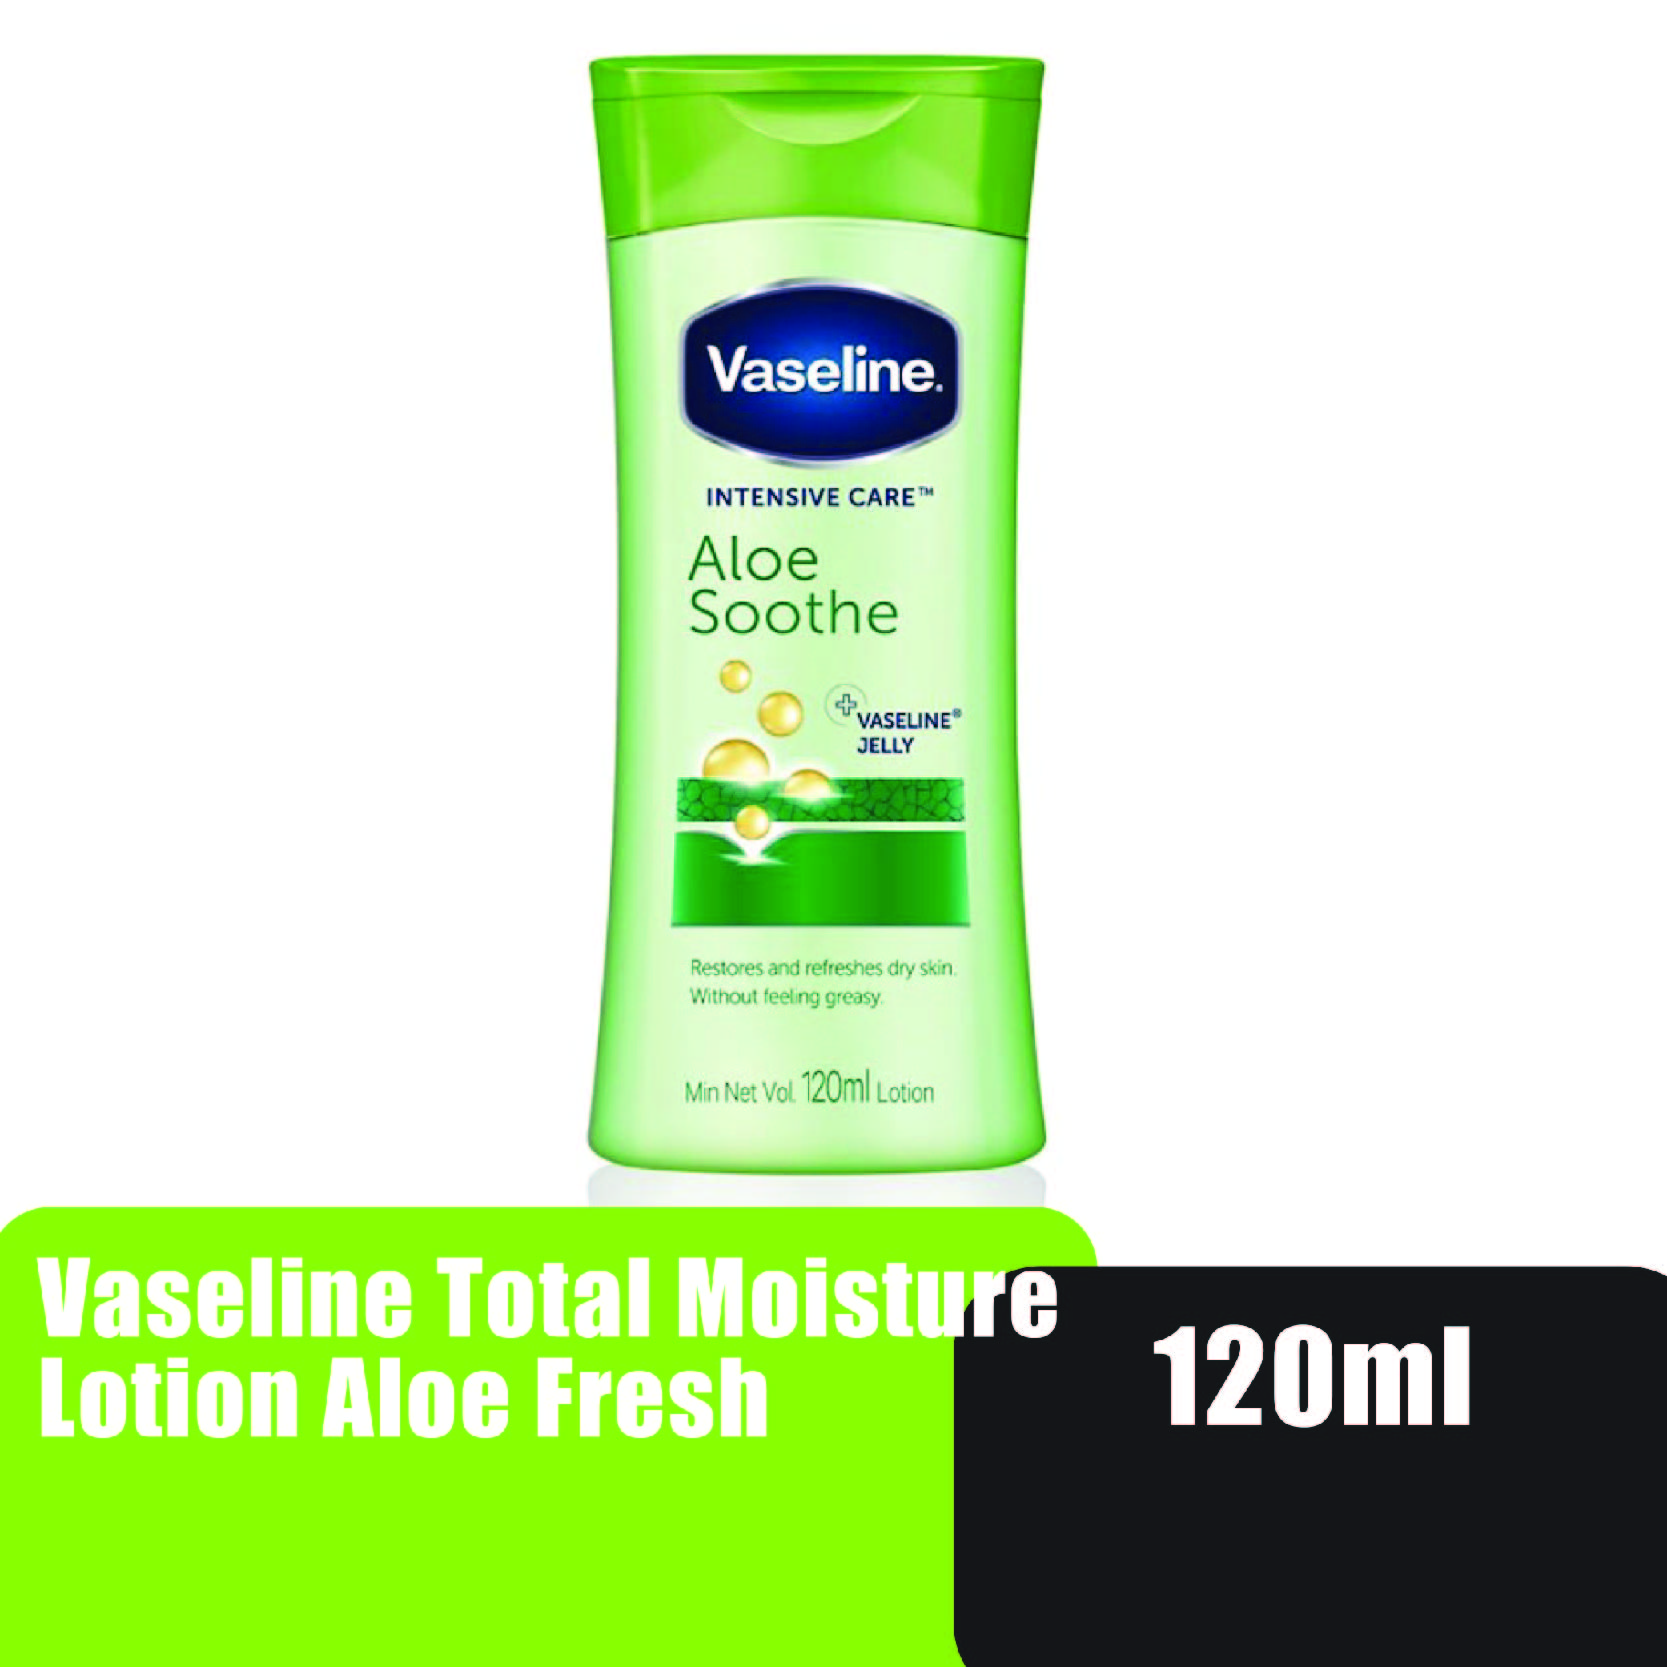 Vaseline Total Moisture Lotion 120ml - Aloe Fresh